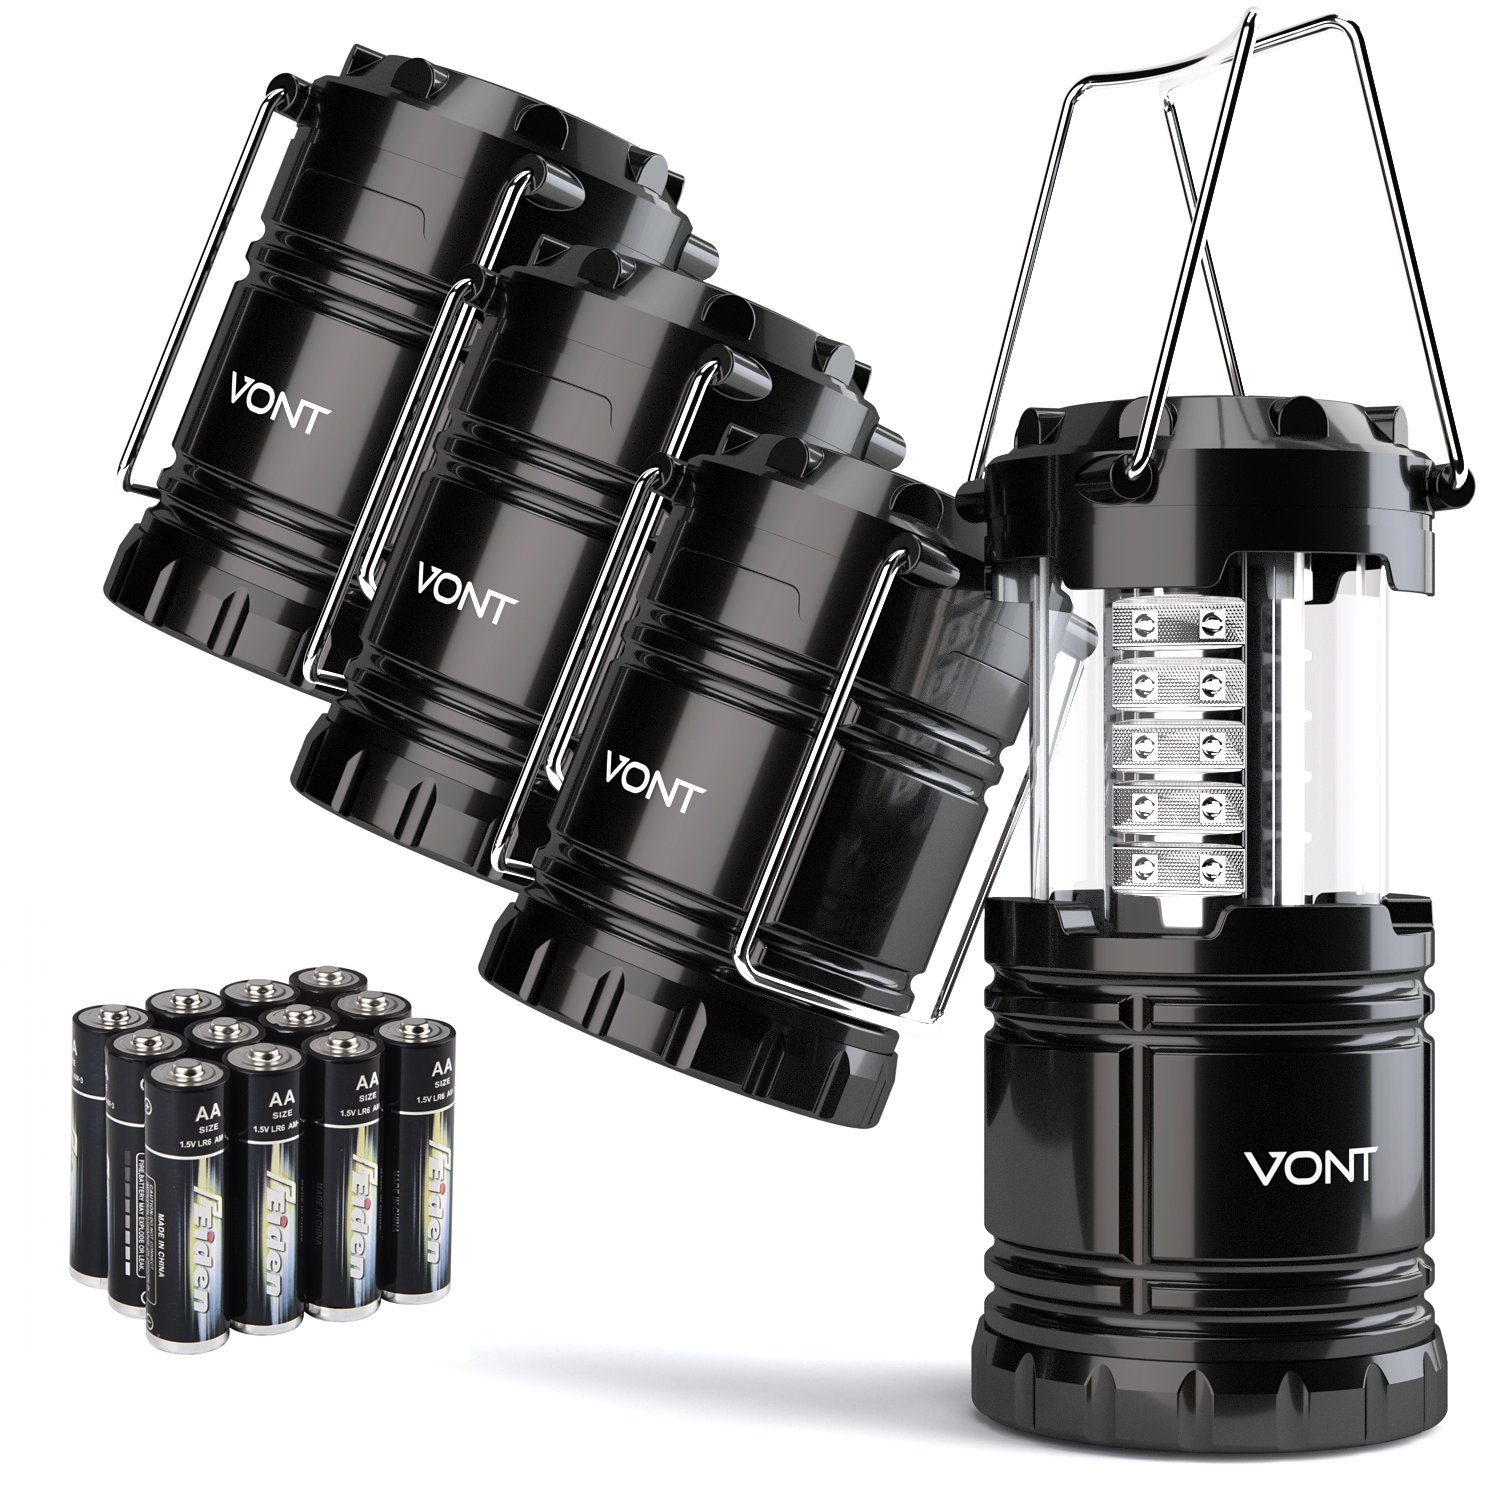 https://www.dontwasteyourmoney.com/wp-content/uploads/2019/08/vont-4-pack-led-camping-lantern-camping-lantern.jpg